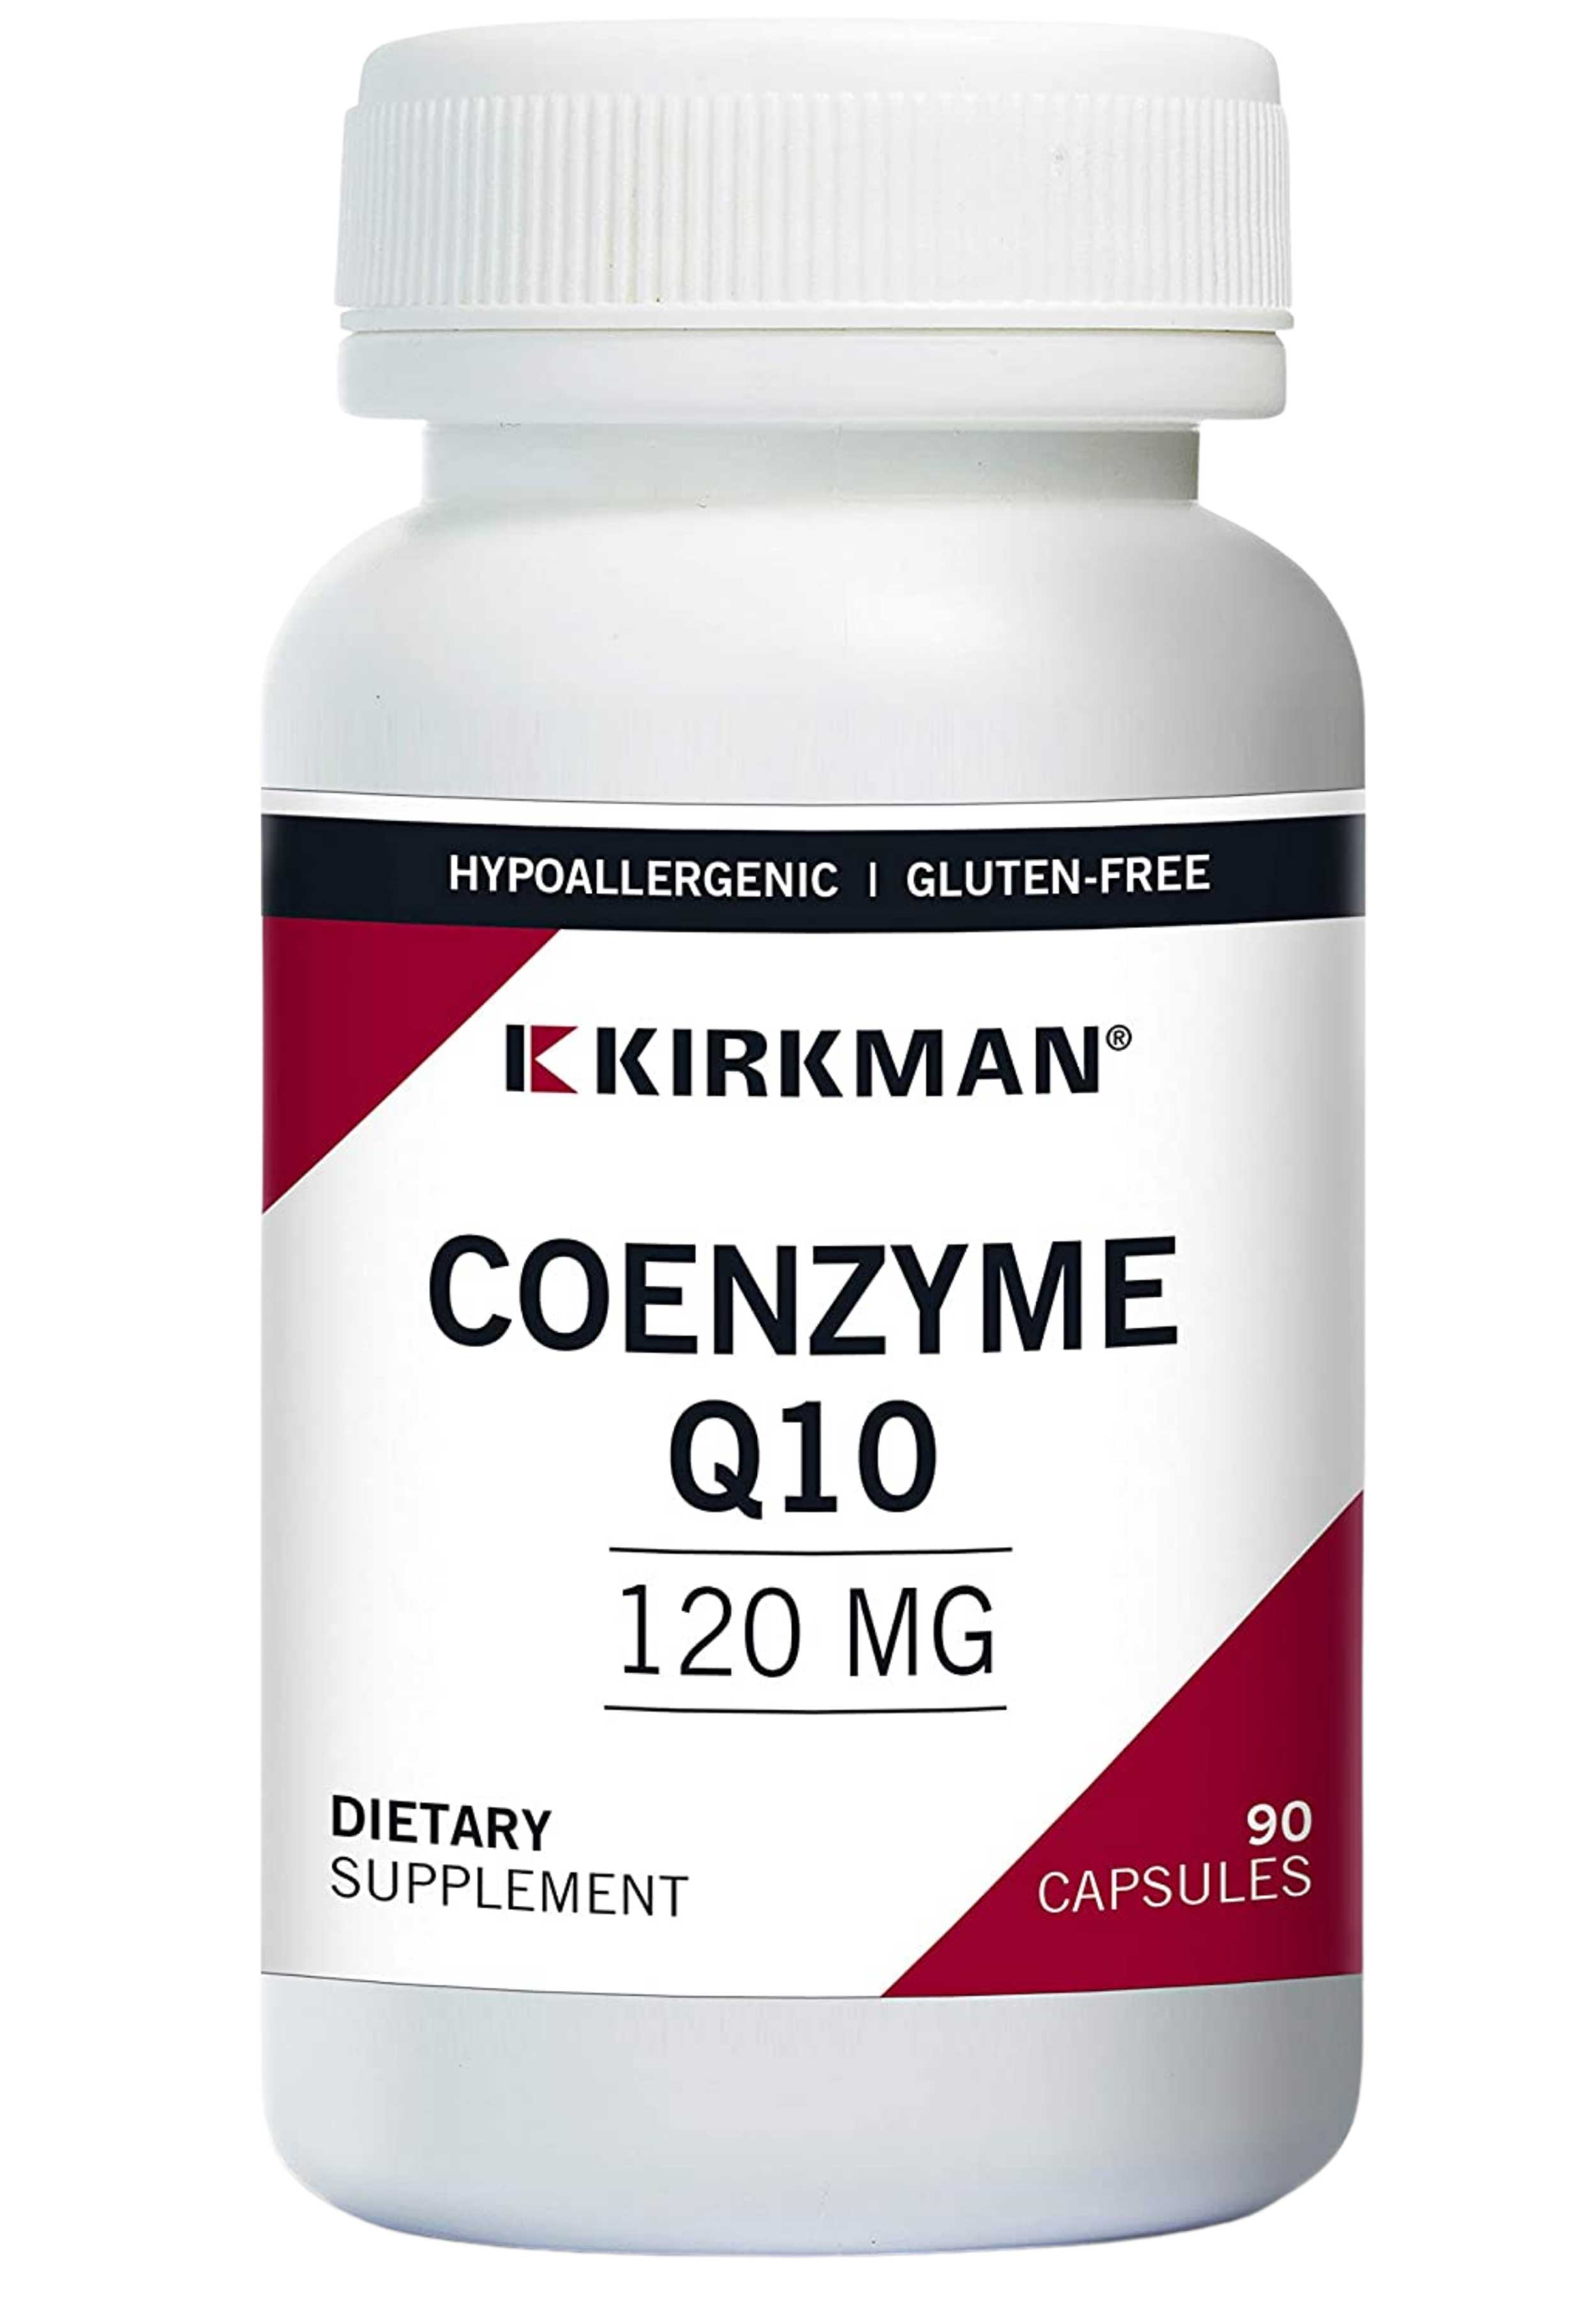 Kirkman Coenzyme Q10 120 mg